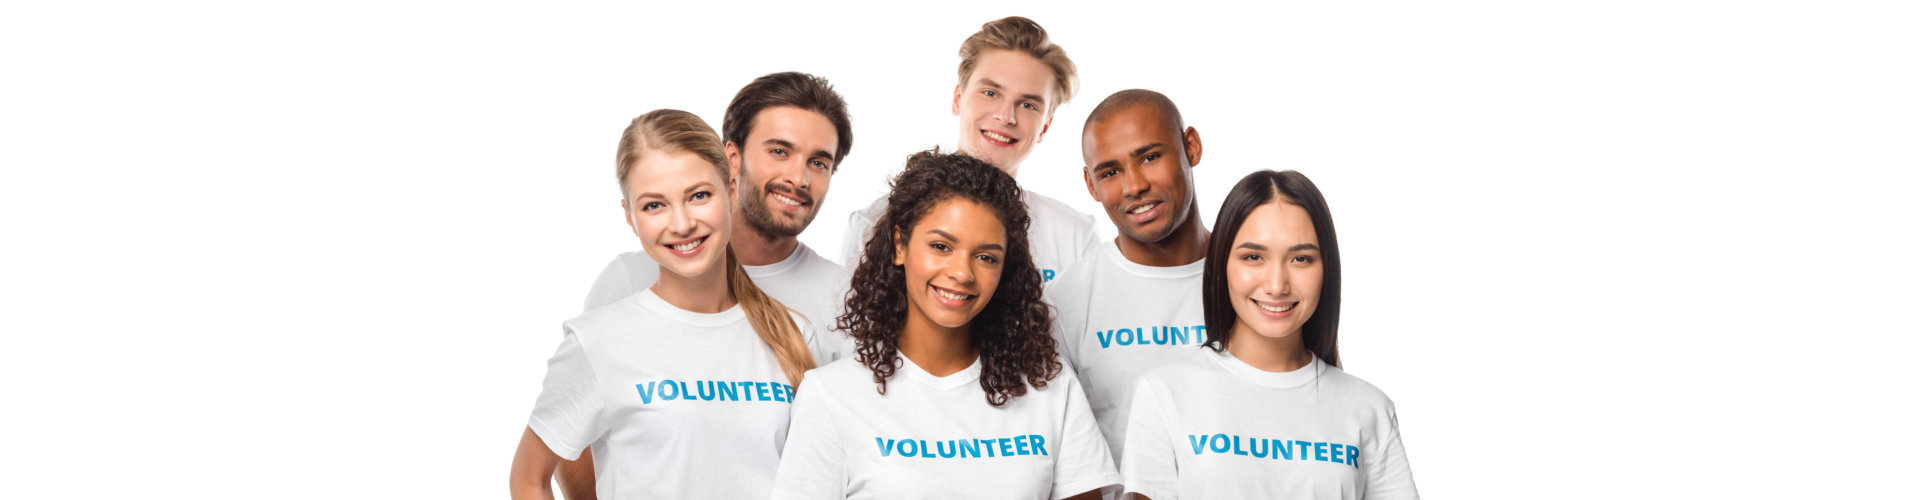 group of people wearing volunteer white shirt